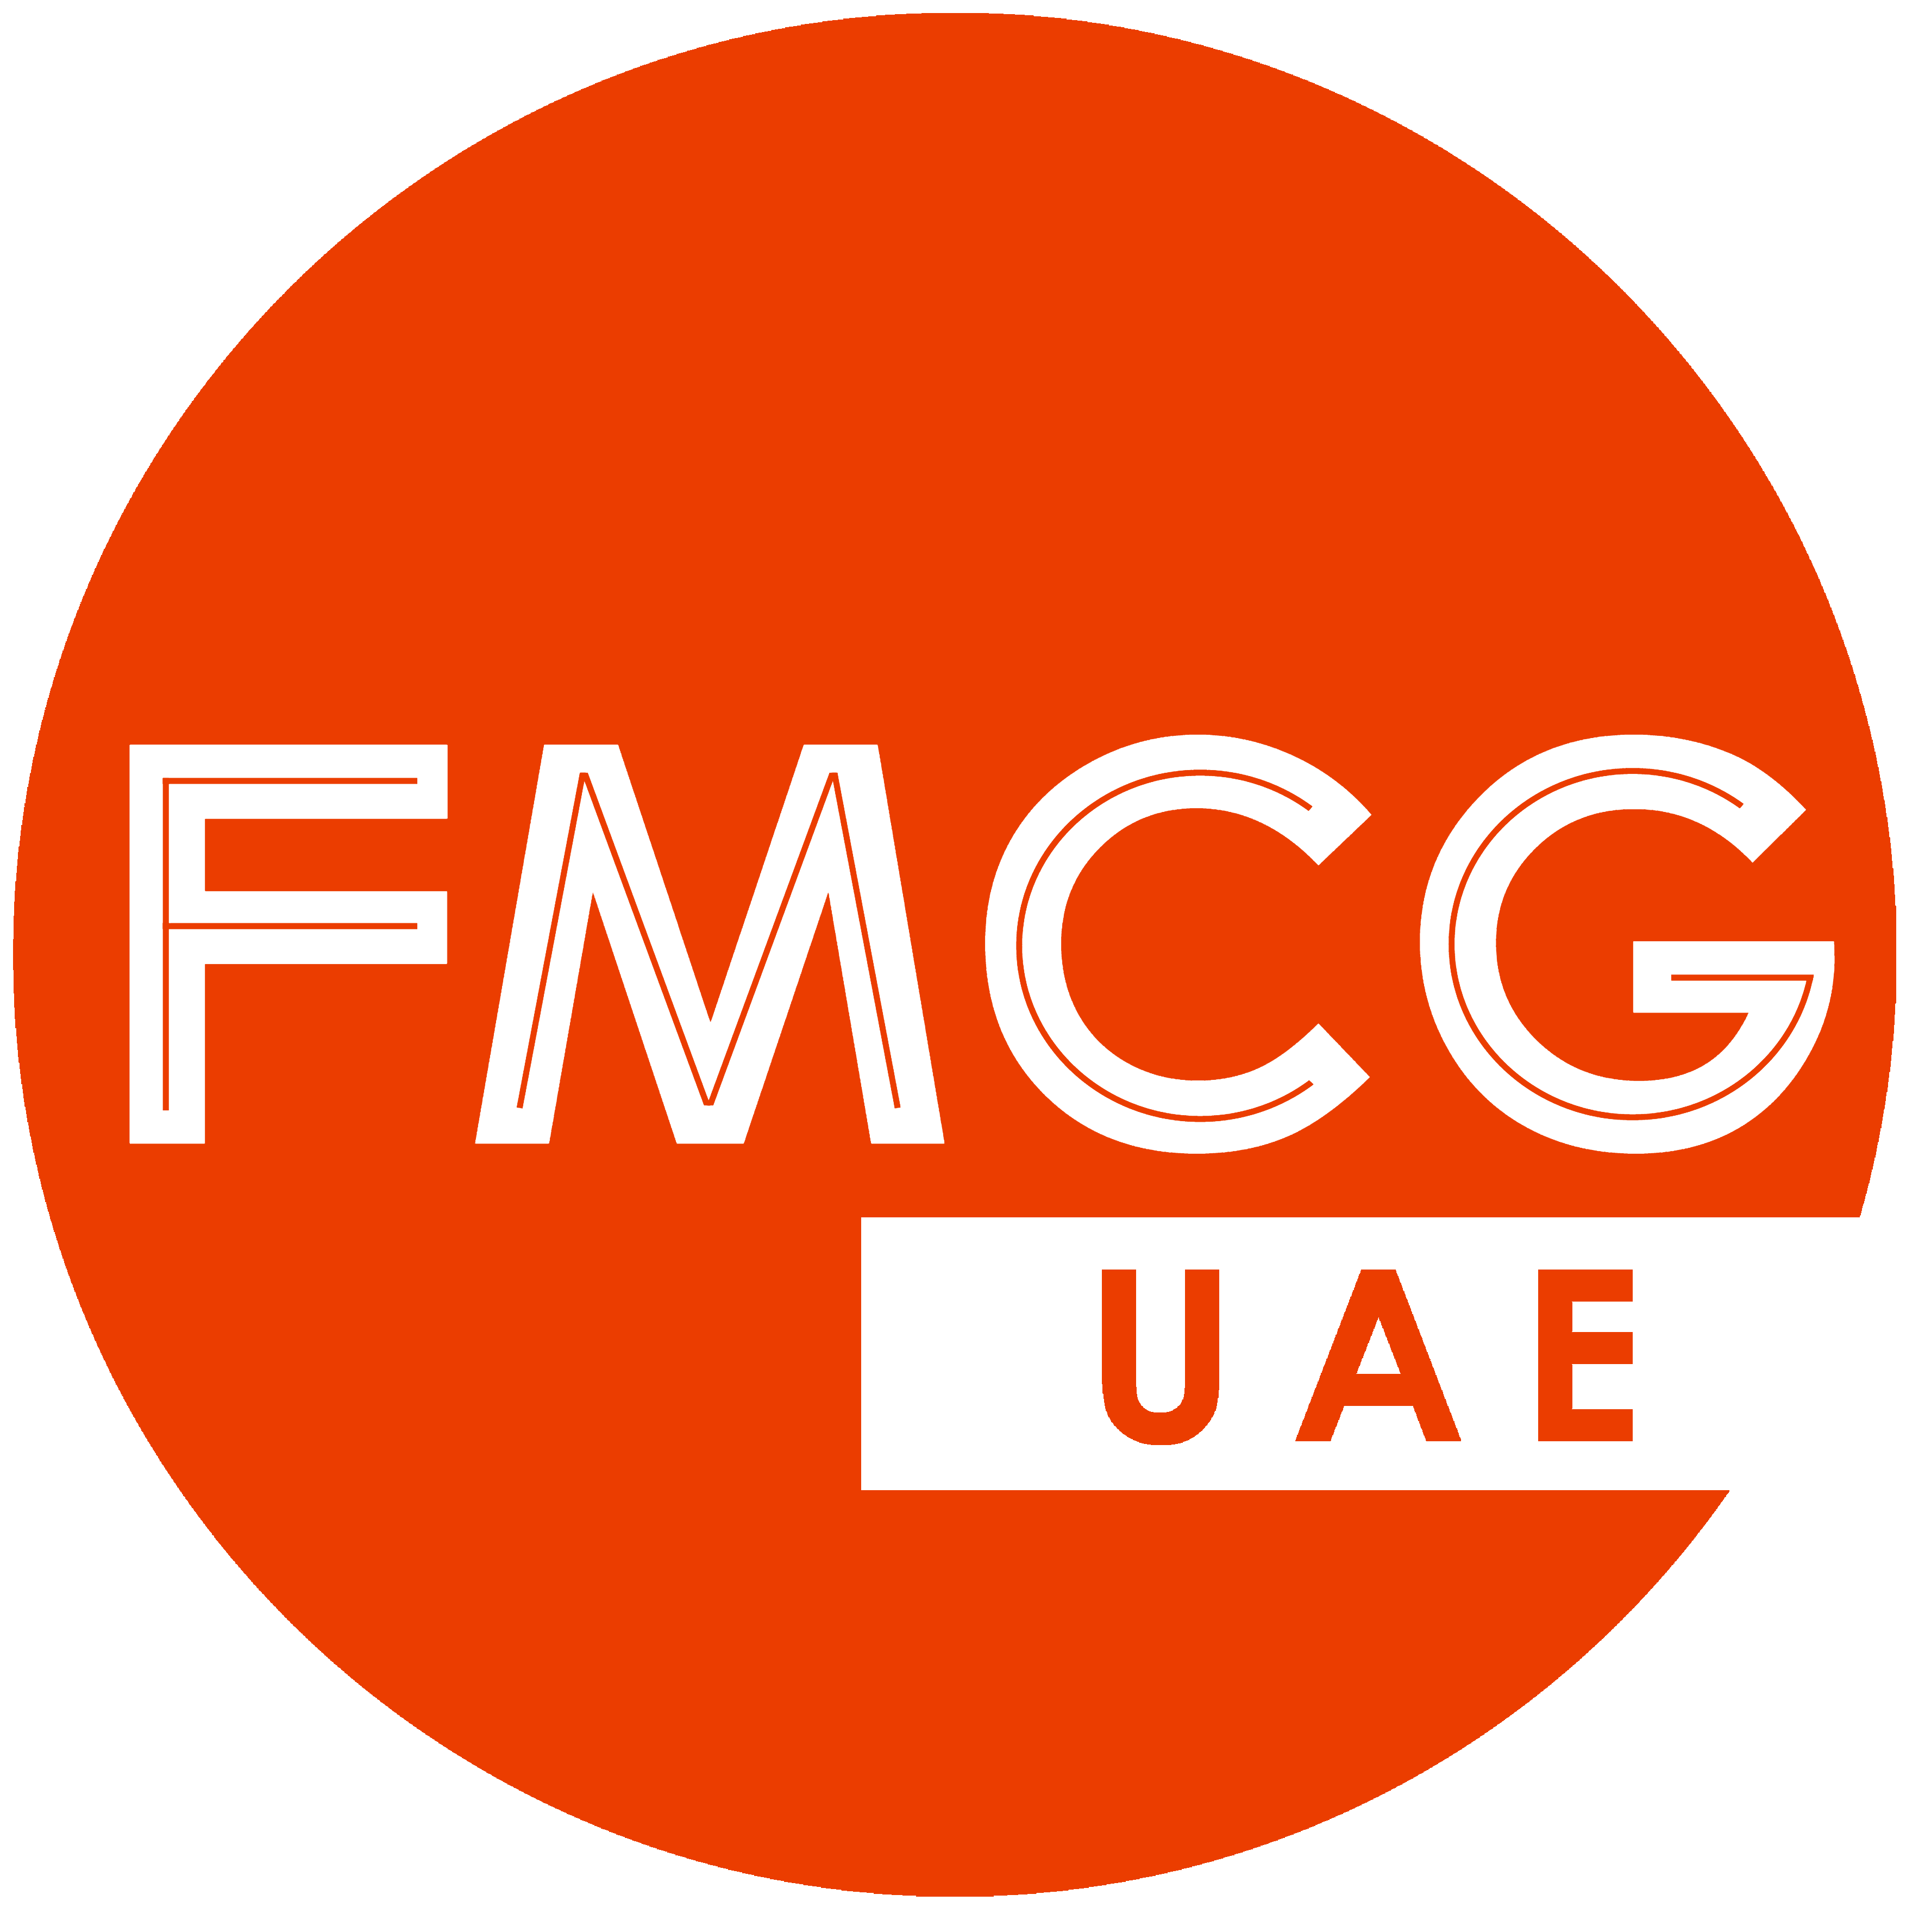 The best fmcg company in dubai - FMCG UAE